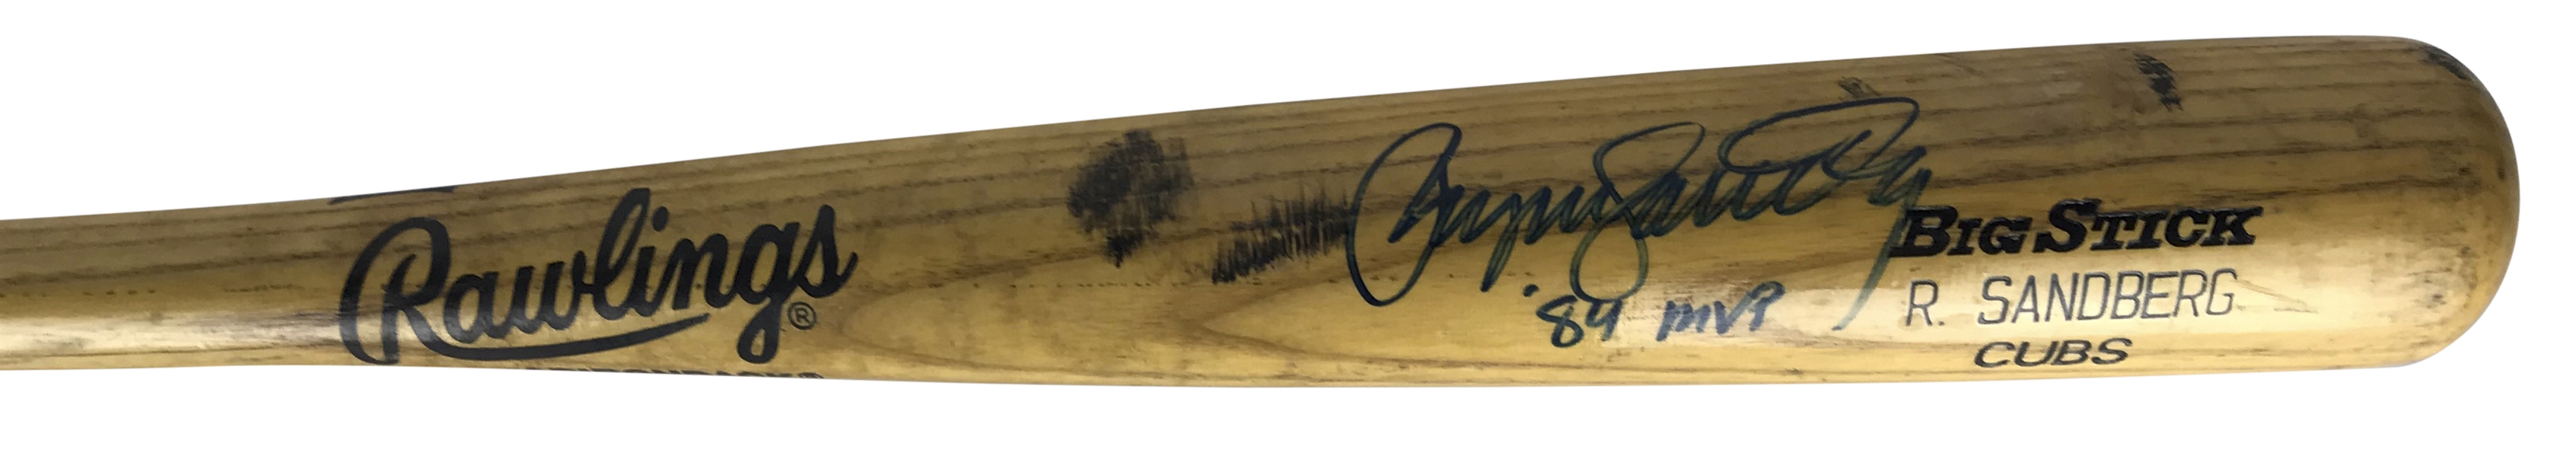 Ryne Sandberg Signed & Game Used 1991 256B Baseball Bat PSA/DNA GU 8.5!